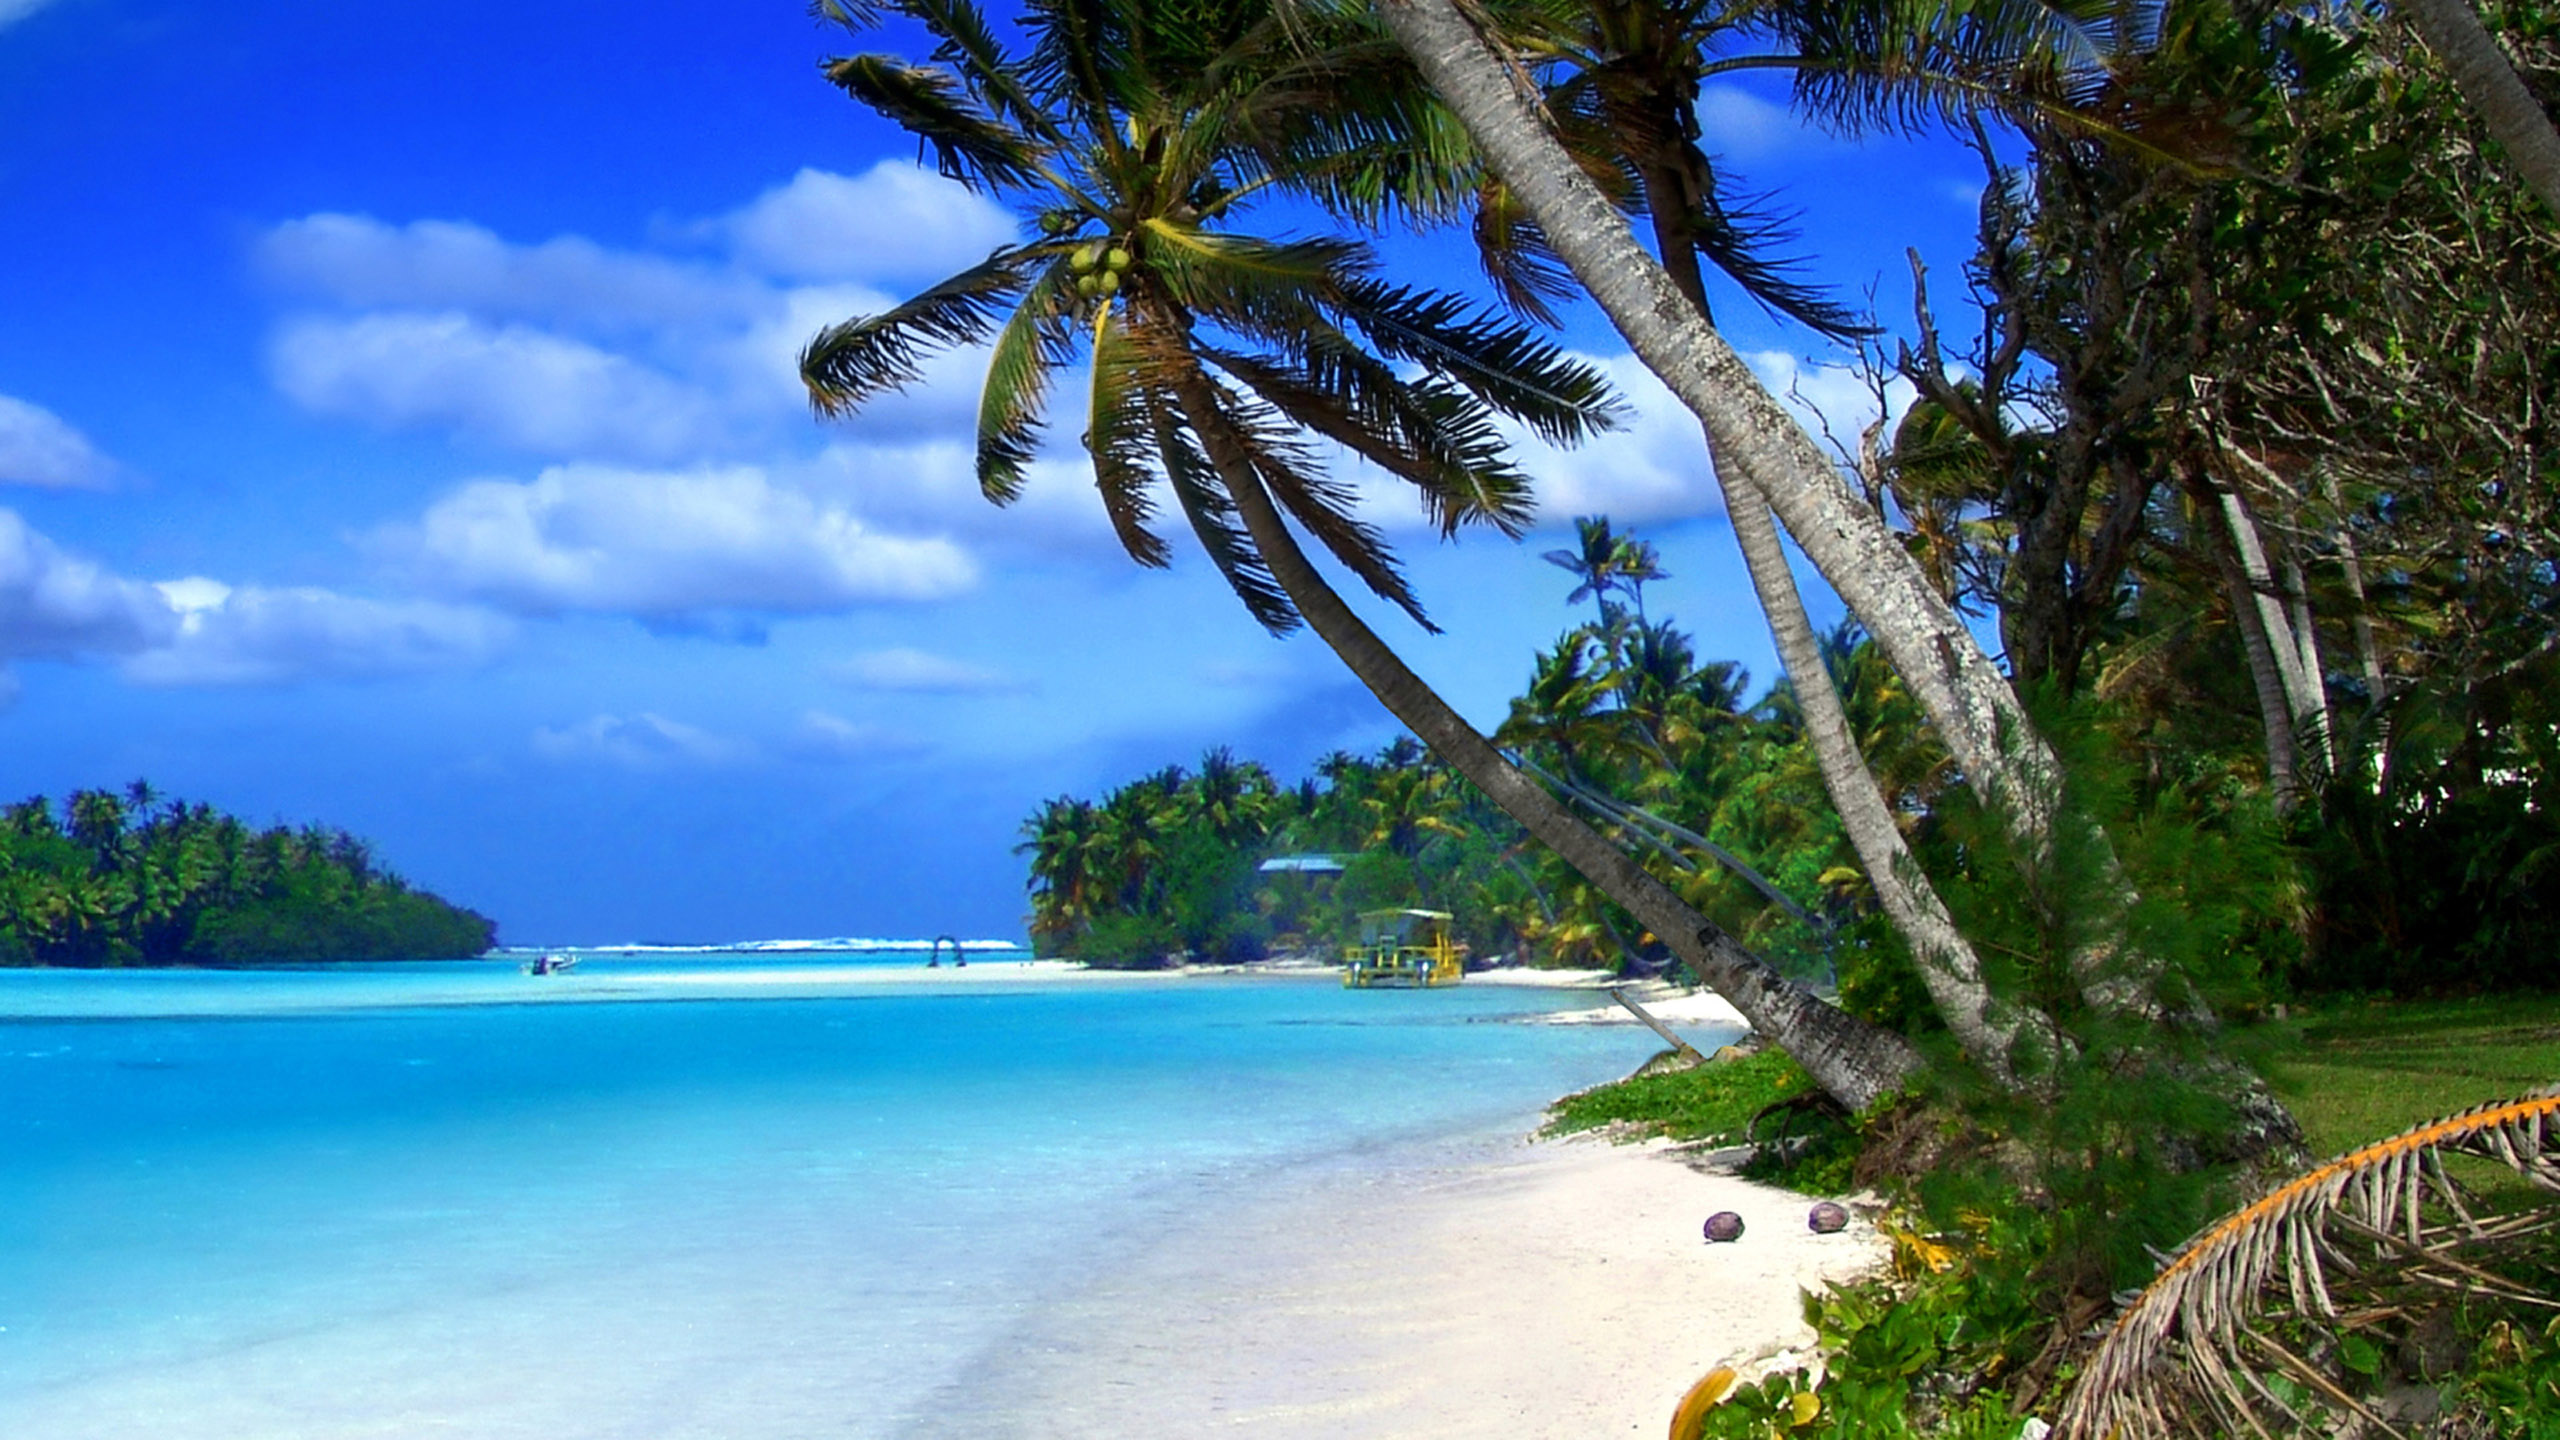 Beach Of Cayman Islands Tropical Landscape, Ocean Blue Water And Green